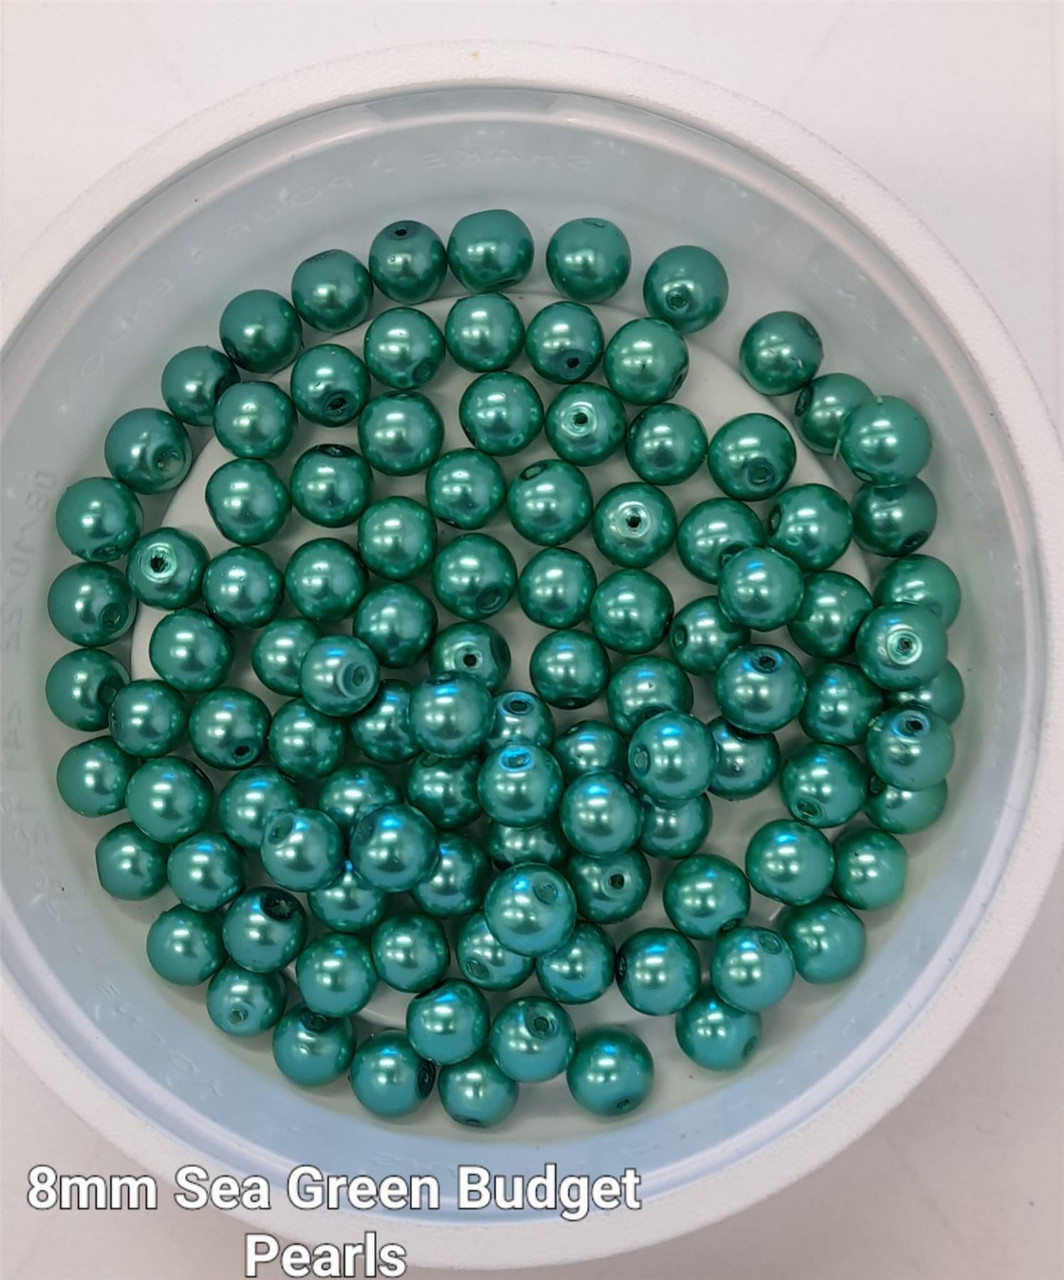 8mm budget Glass Pearls - Sea Green (100 beads)